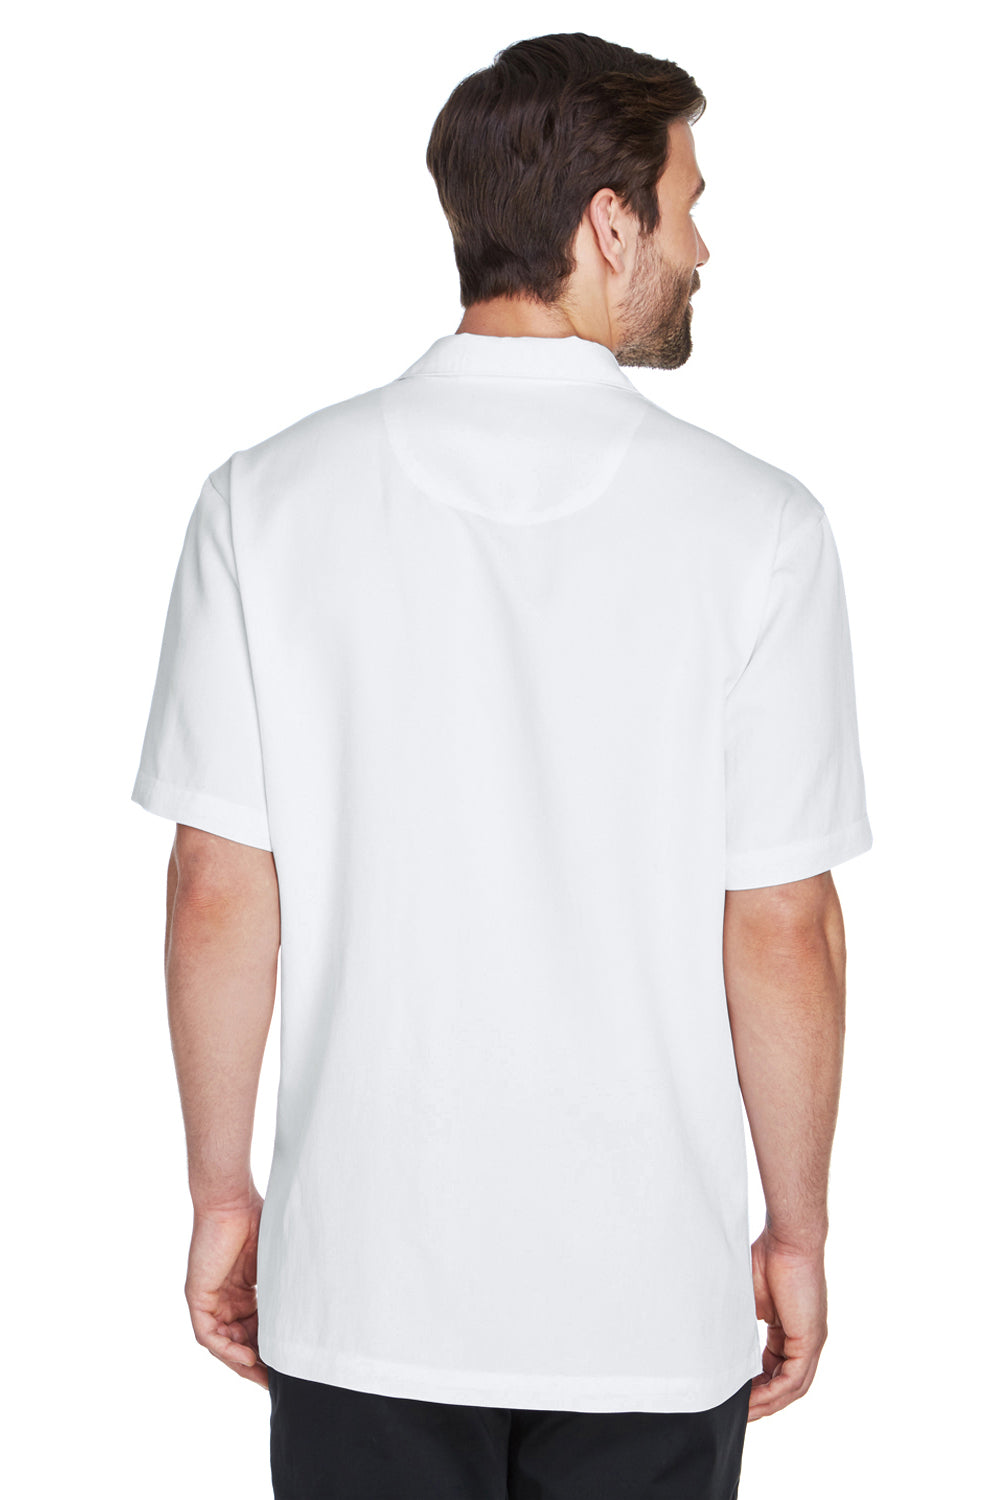 UltraClub 8980 Mens Cabana Breeze Short Sleeve Button Down Camp Shirt w/ Pocket White Back